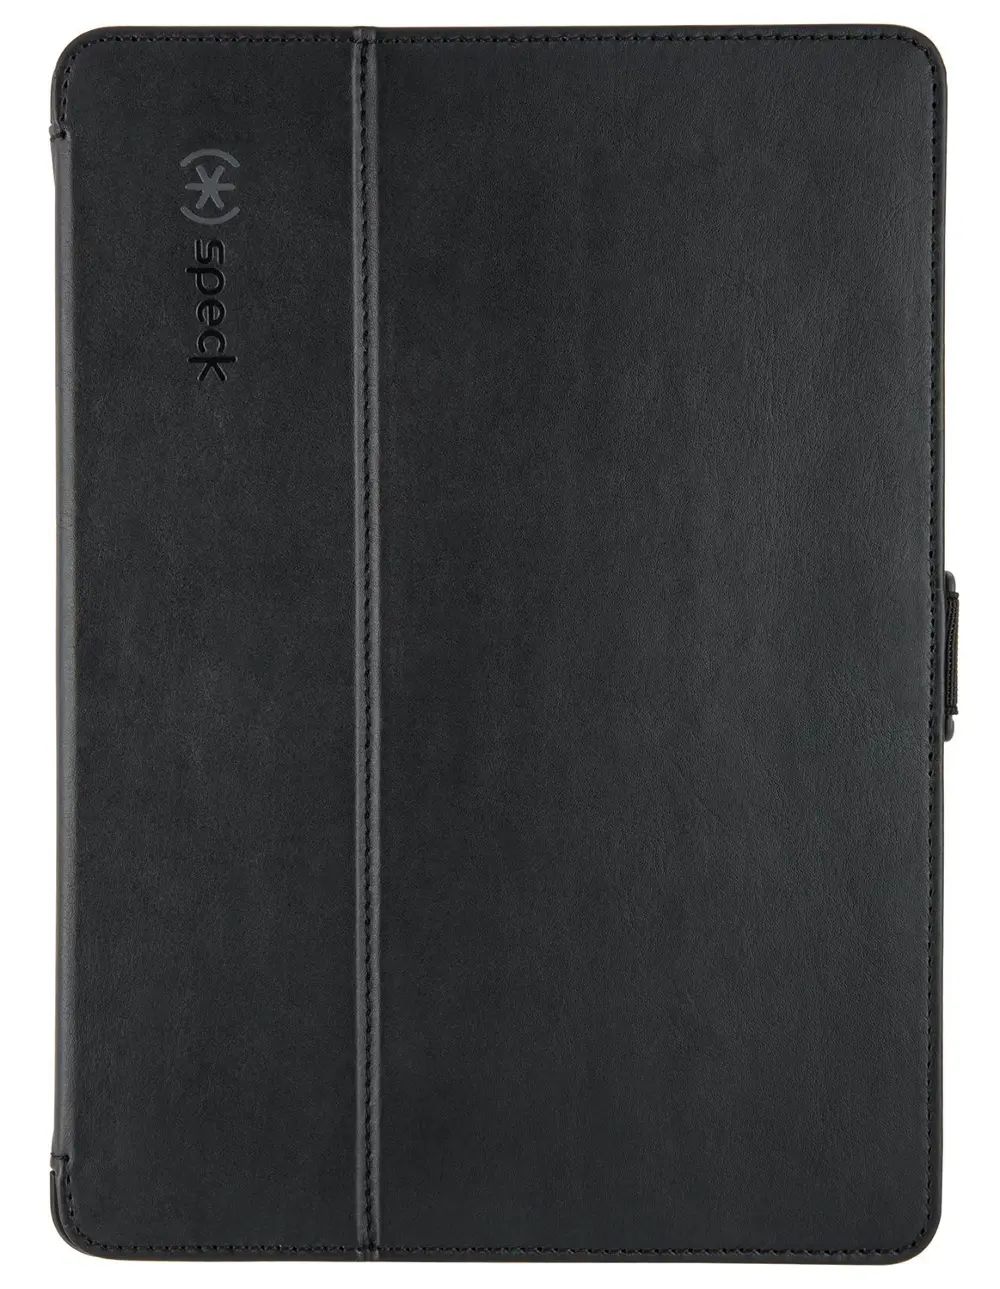 Speck StyleFolio Flip Case Cover for Samsung Galaxy Tab S 10.5  - Black-1